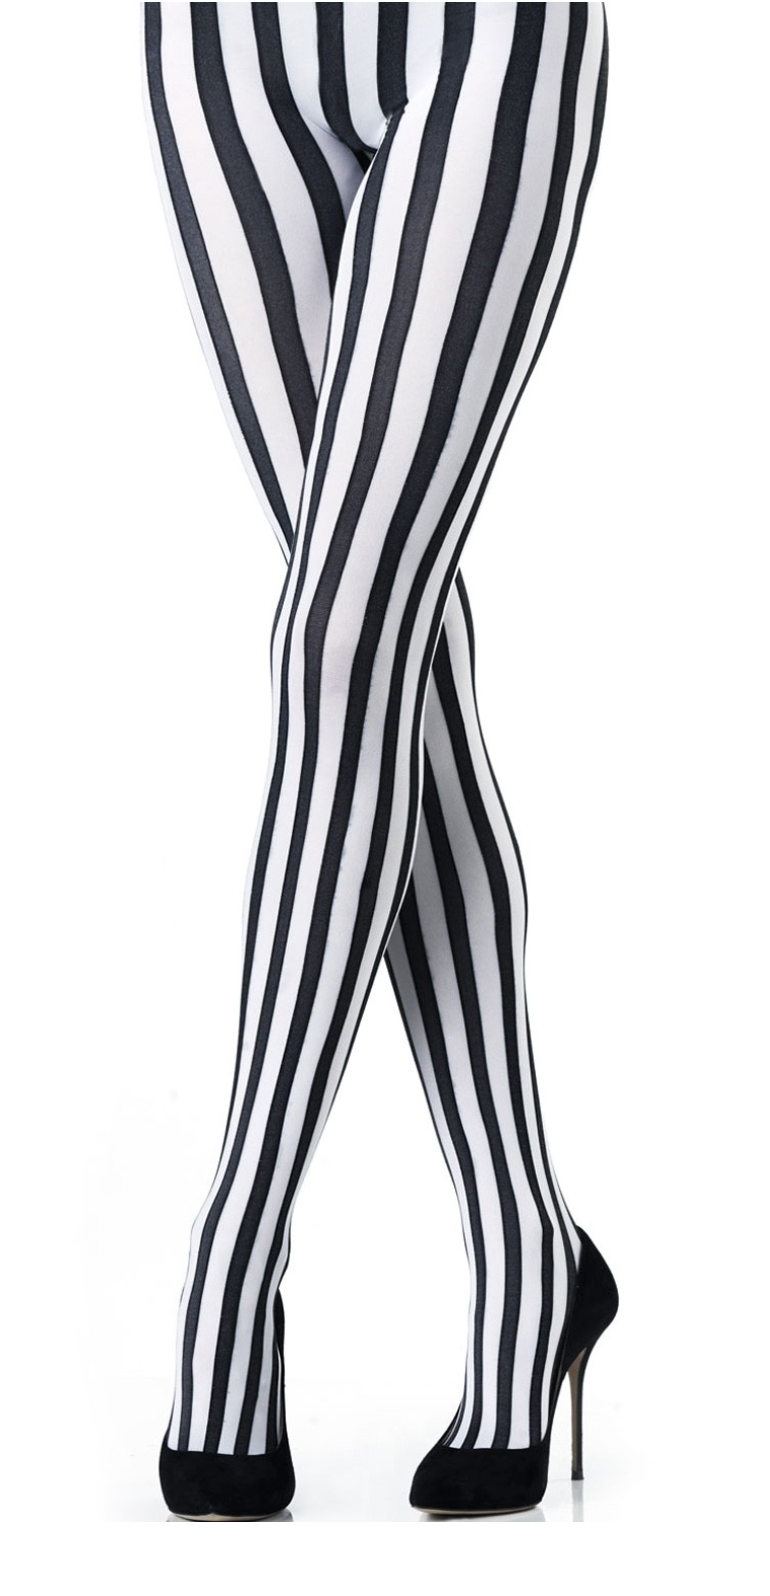 Emilio Cavallini Two Toned Vertical Stripes Tights - black and white striped tights